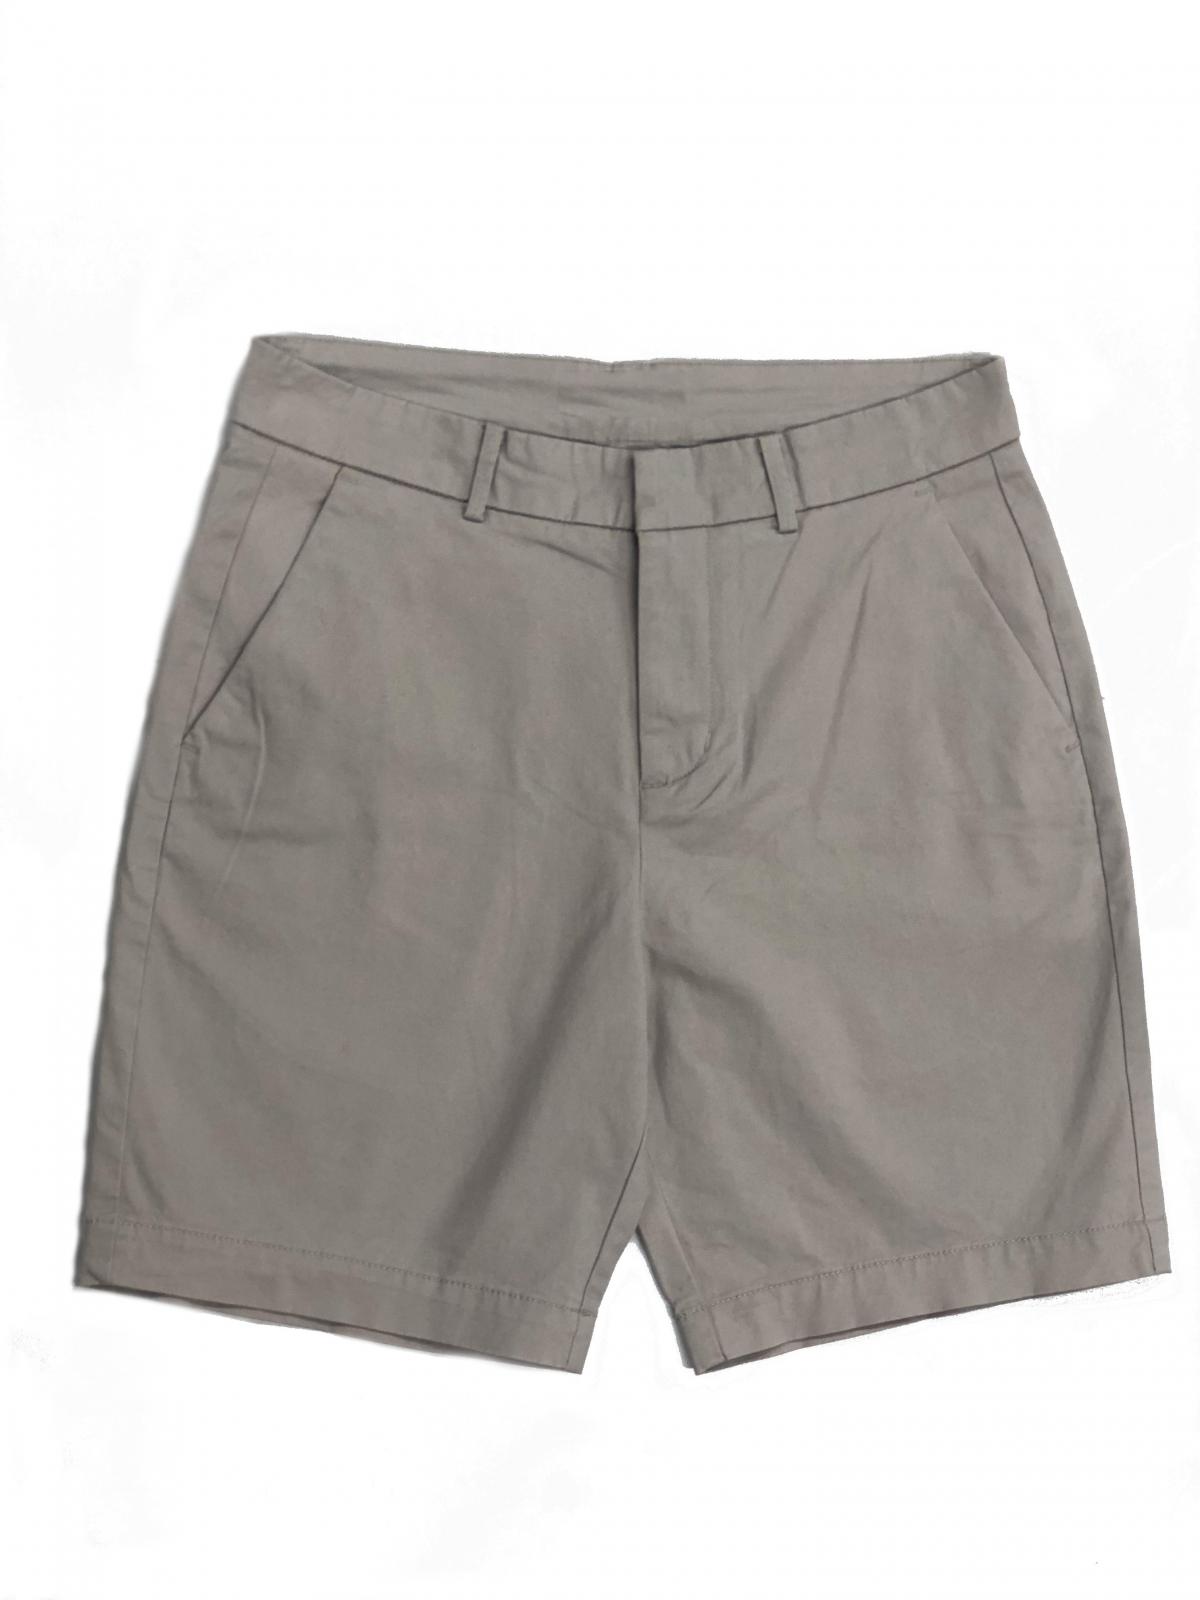 Men's Kaki Shorts SS0007 #0